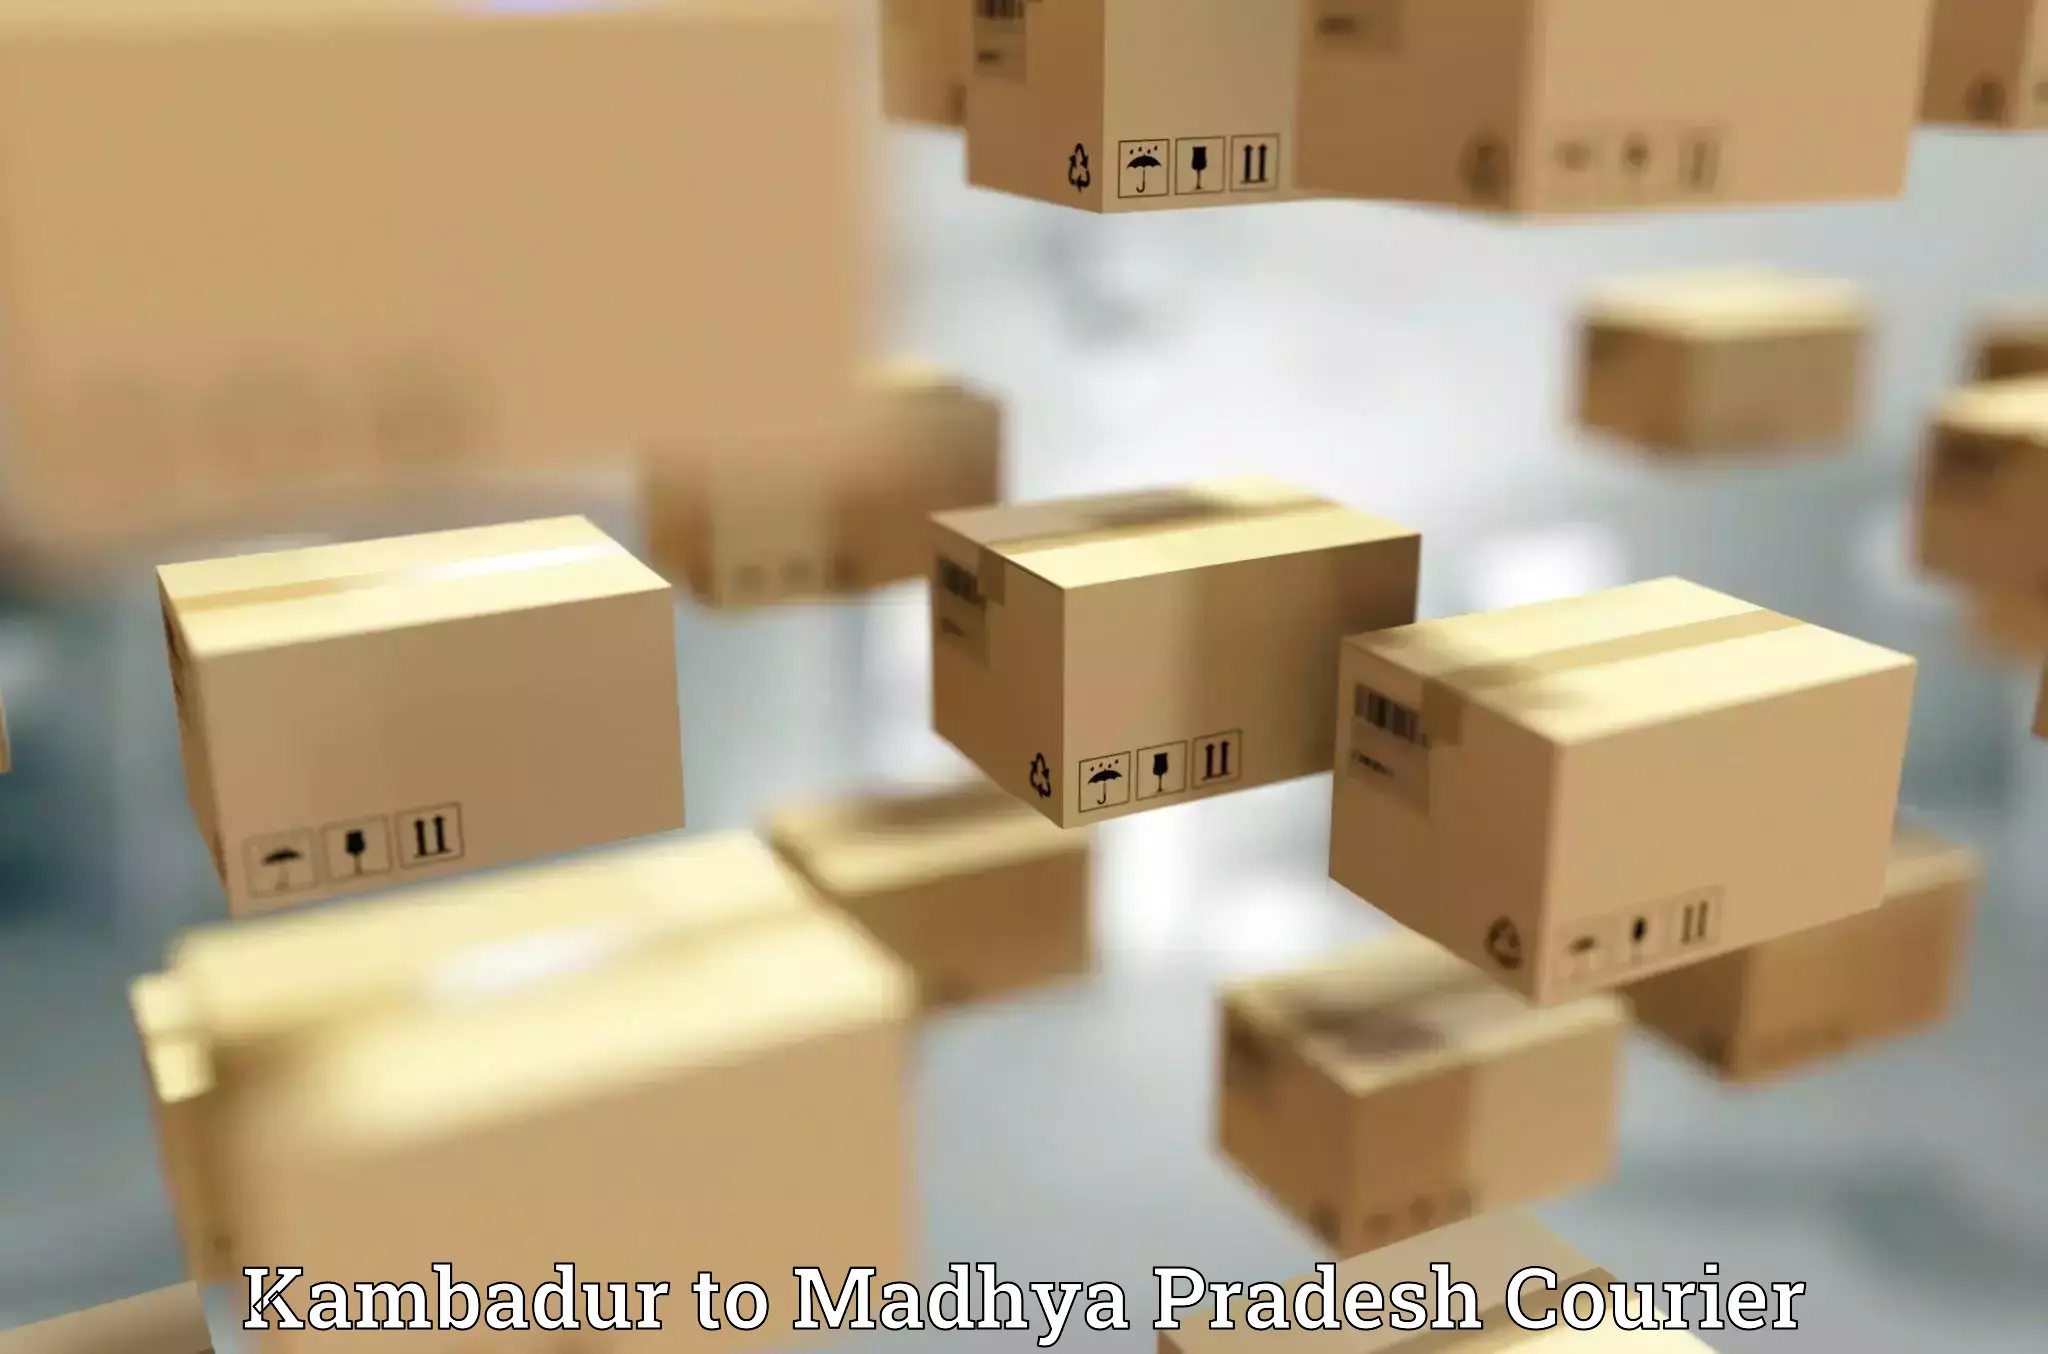 Supply chain delivery in Kambadur to Madhya Pradesh